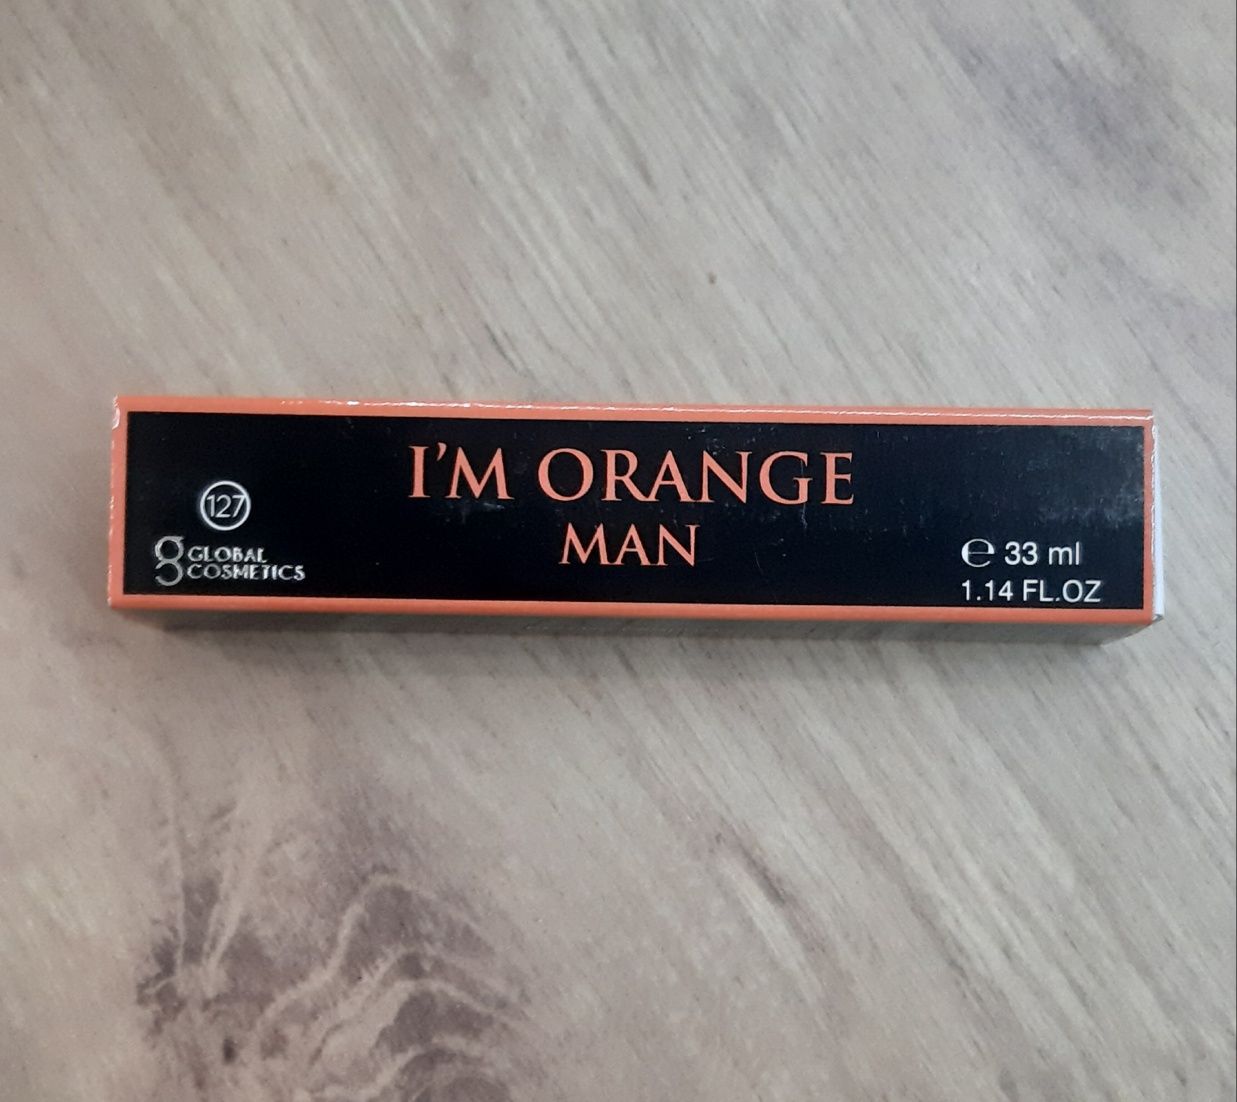 Męskie Perfumy I'm Orange Man (Global Cosmetics)